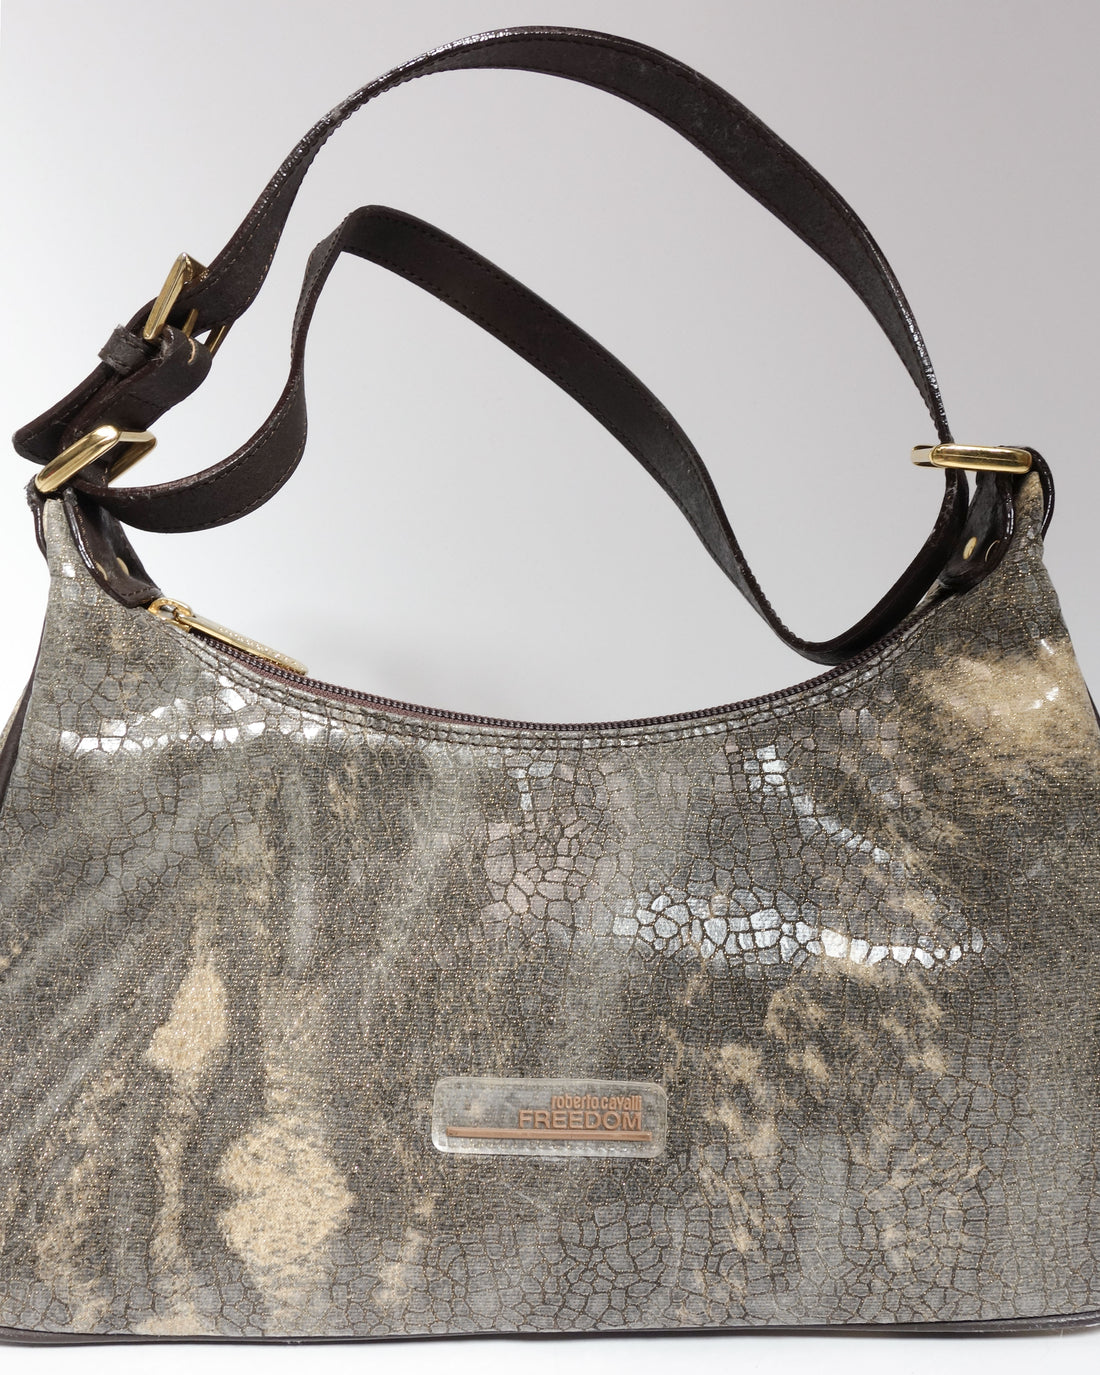 Cavalli Freedom Cracked Leather Shoulder Bag 2000's